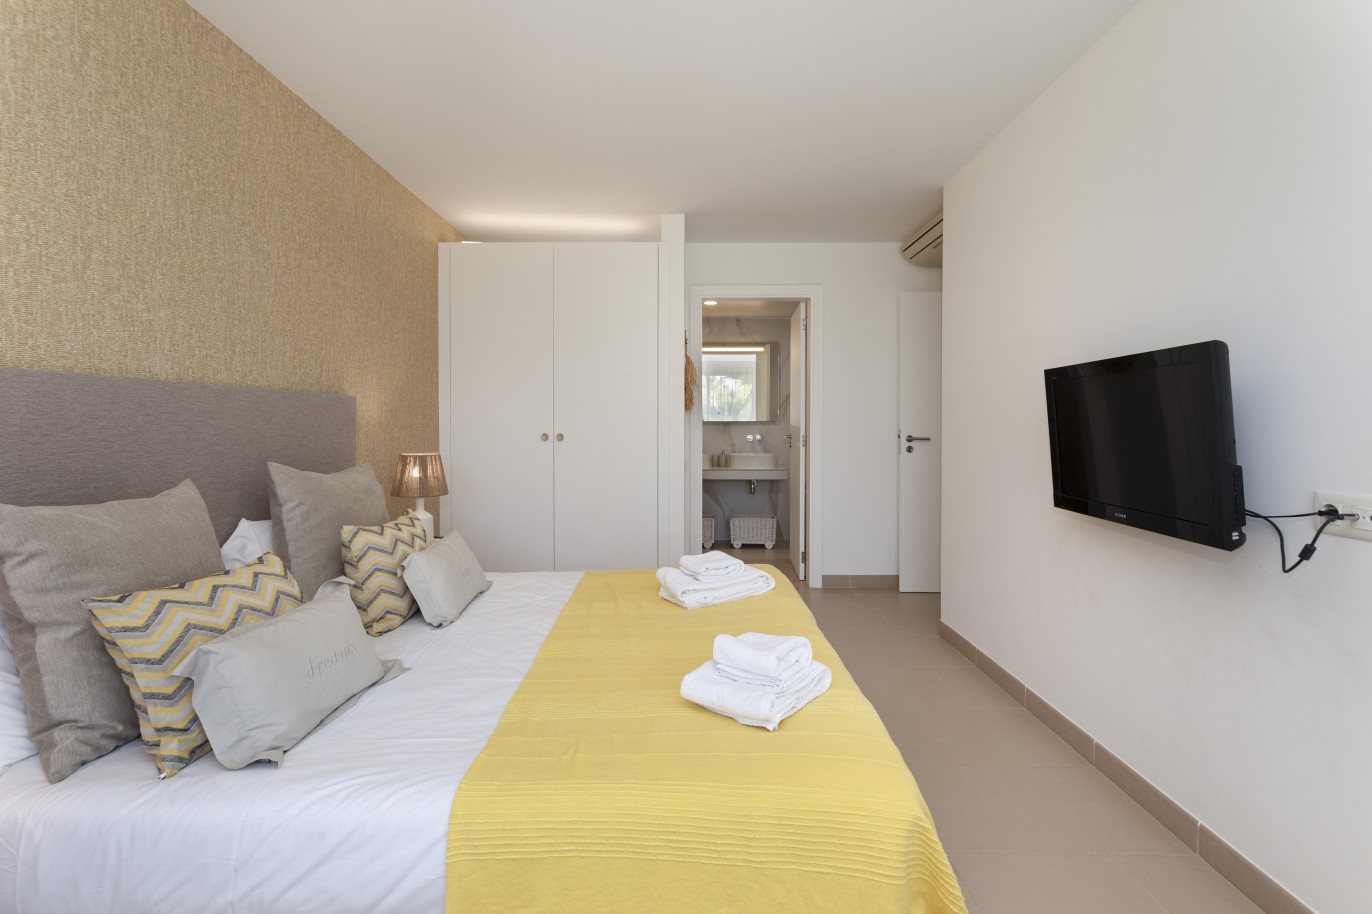 2-bedroom flat for sale in private condominium in Salgados, Algarve_253497